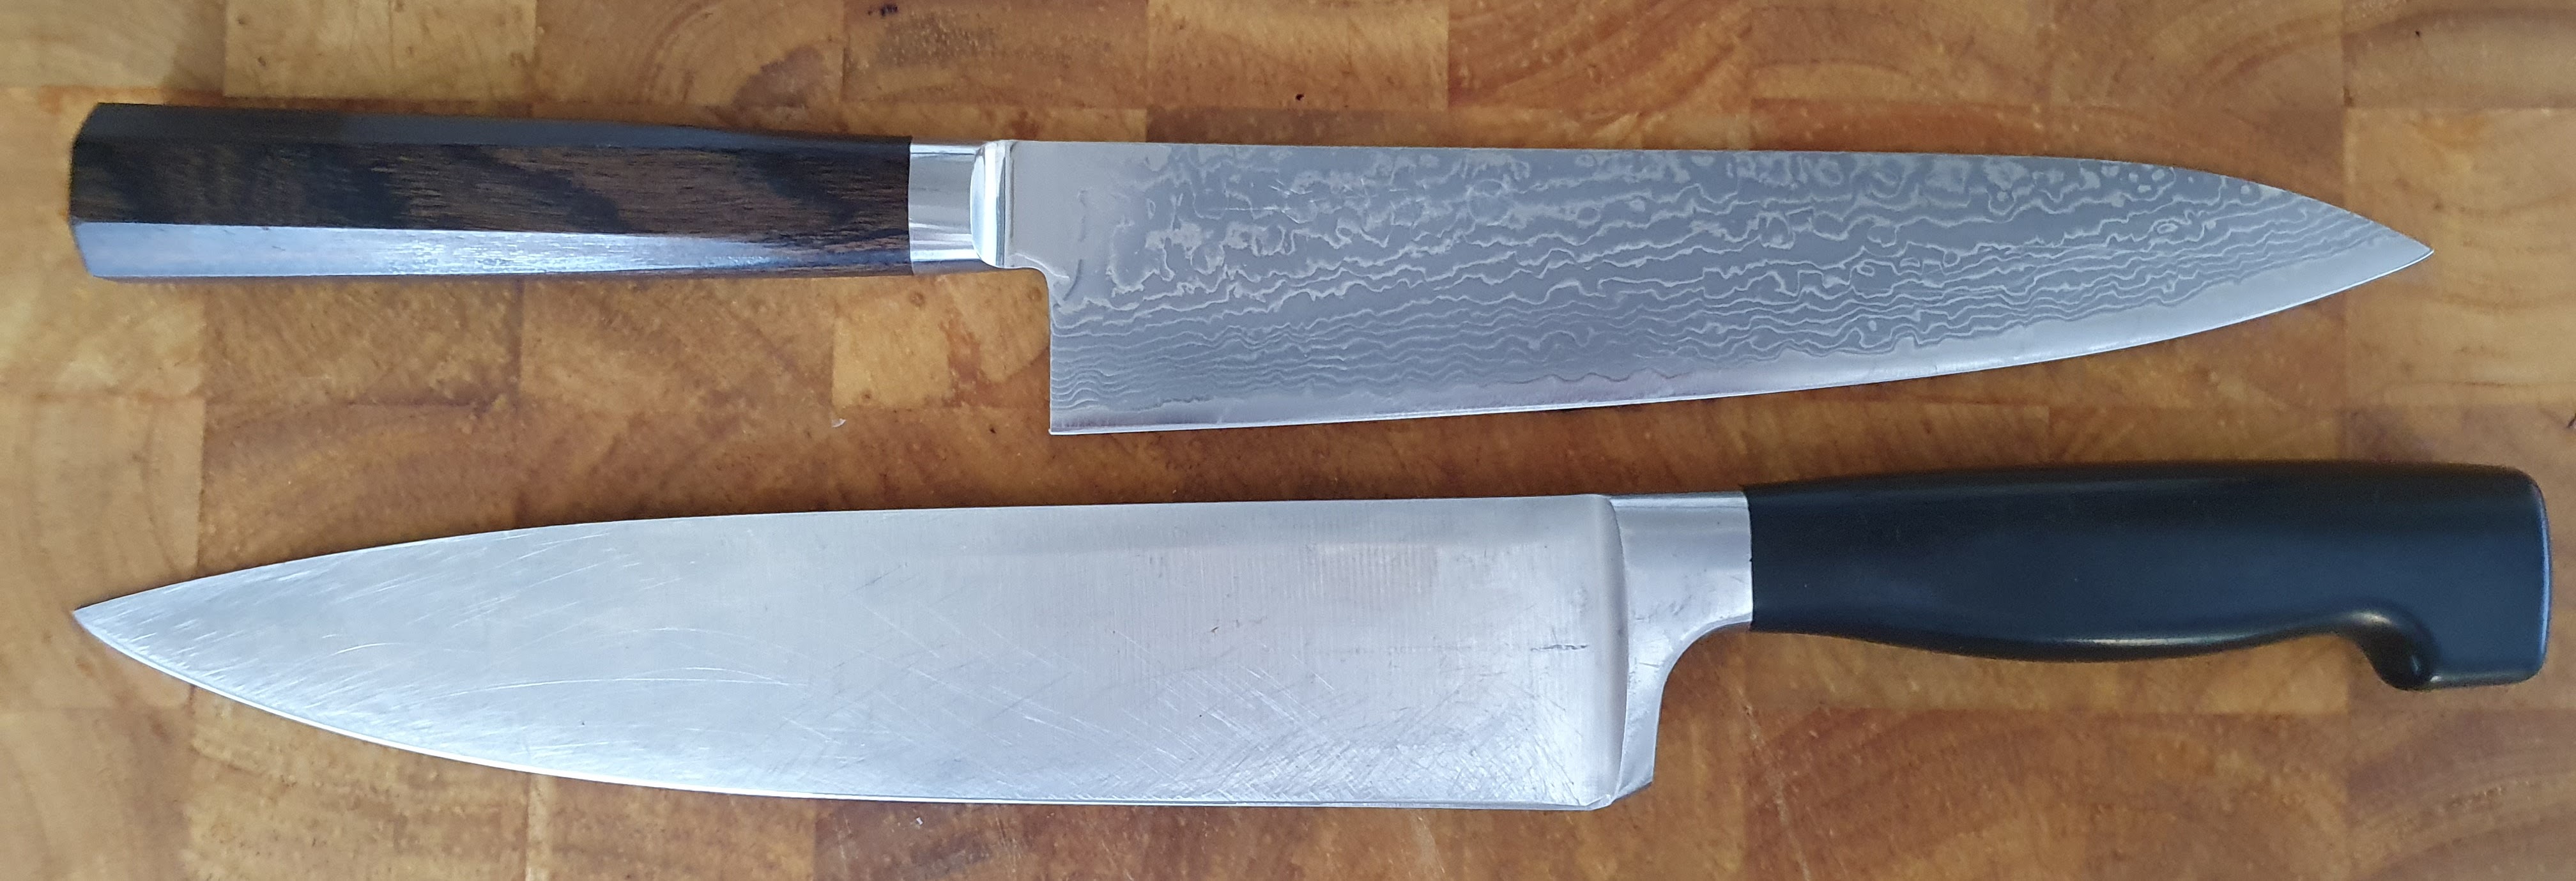 https://upload.wikimedia.org/wikipedia/commons/b/bb/Chef%27s_knives_Japanese_vs_German_type_horizontal.jpg